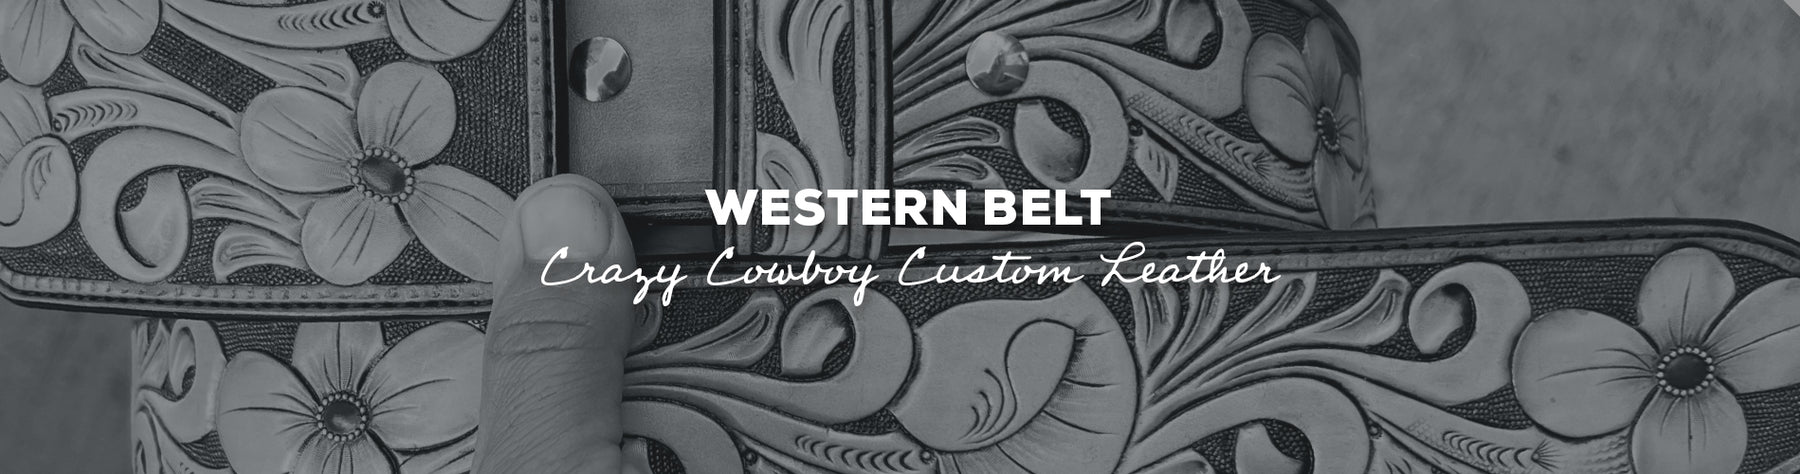 Gift Idea: Western Belt with Crazy Cowboy Custom Leather